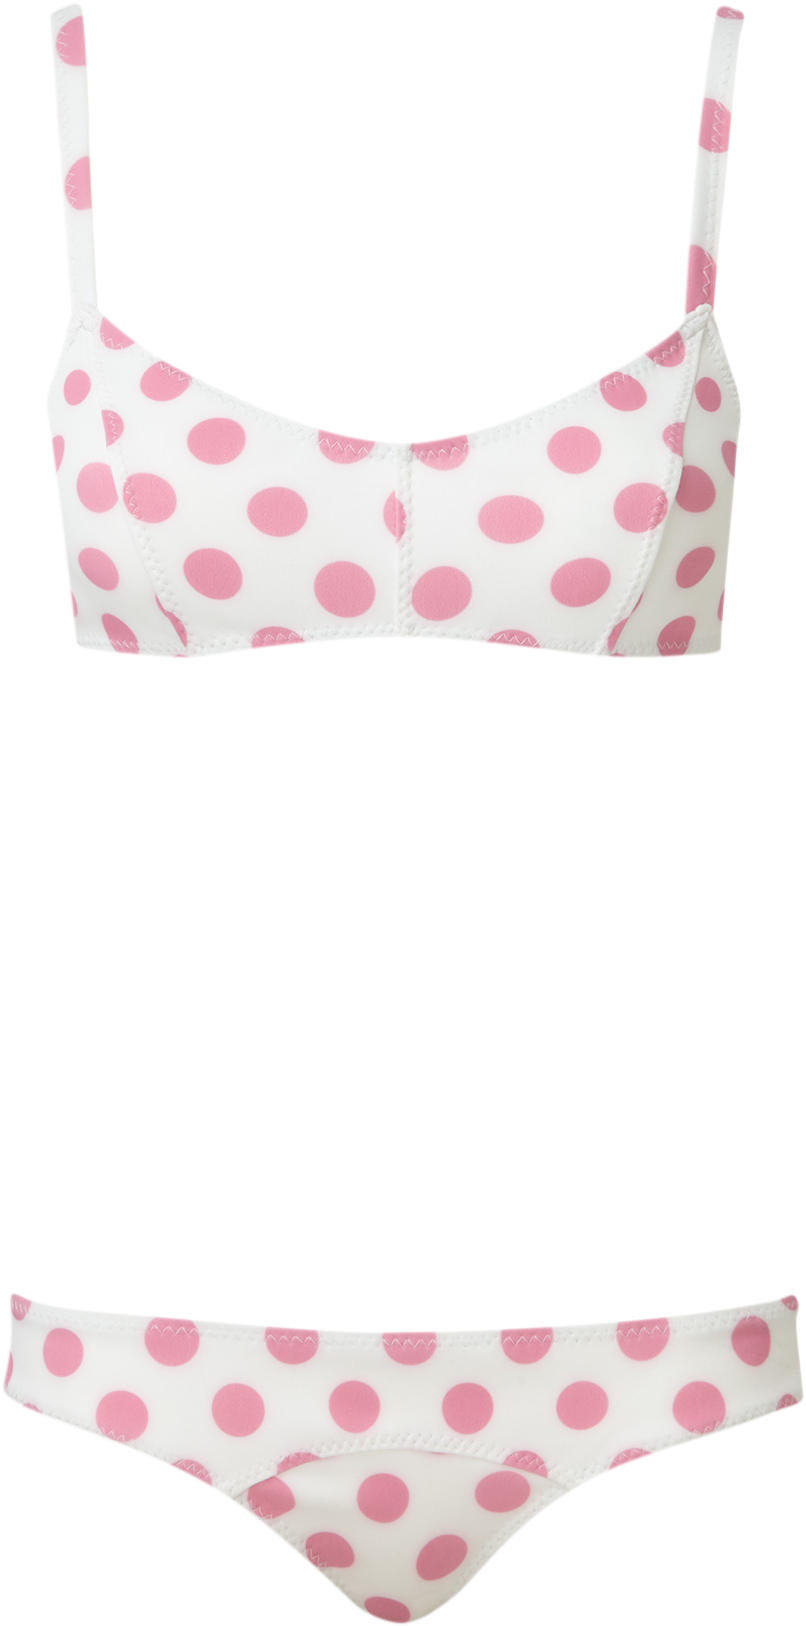 A White And Pink Polka Dot Garment